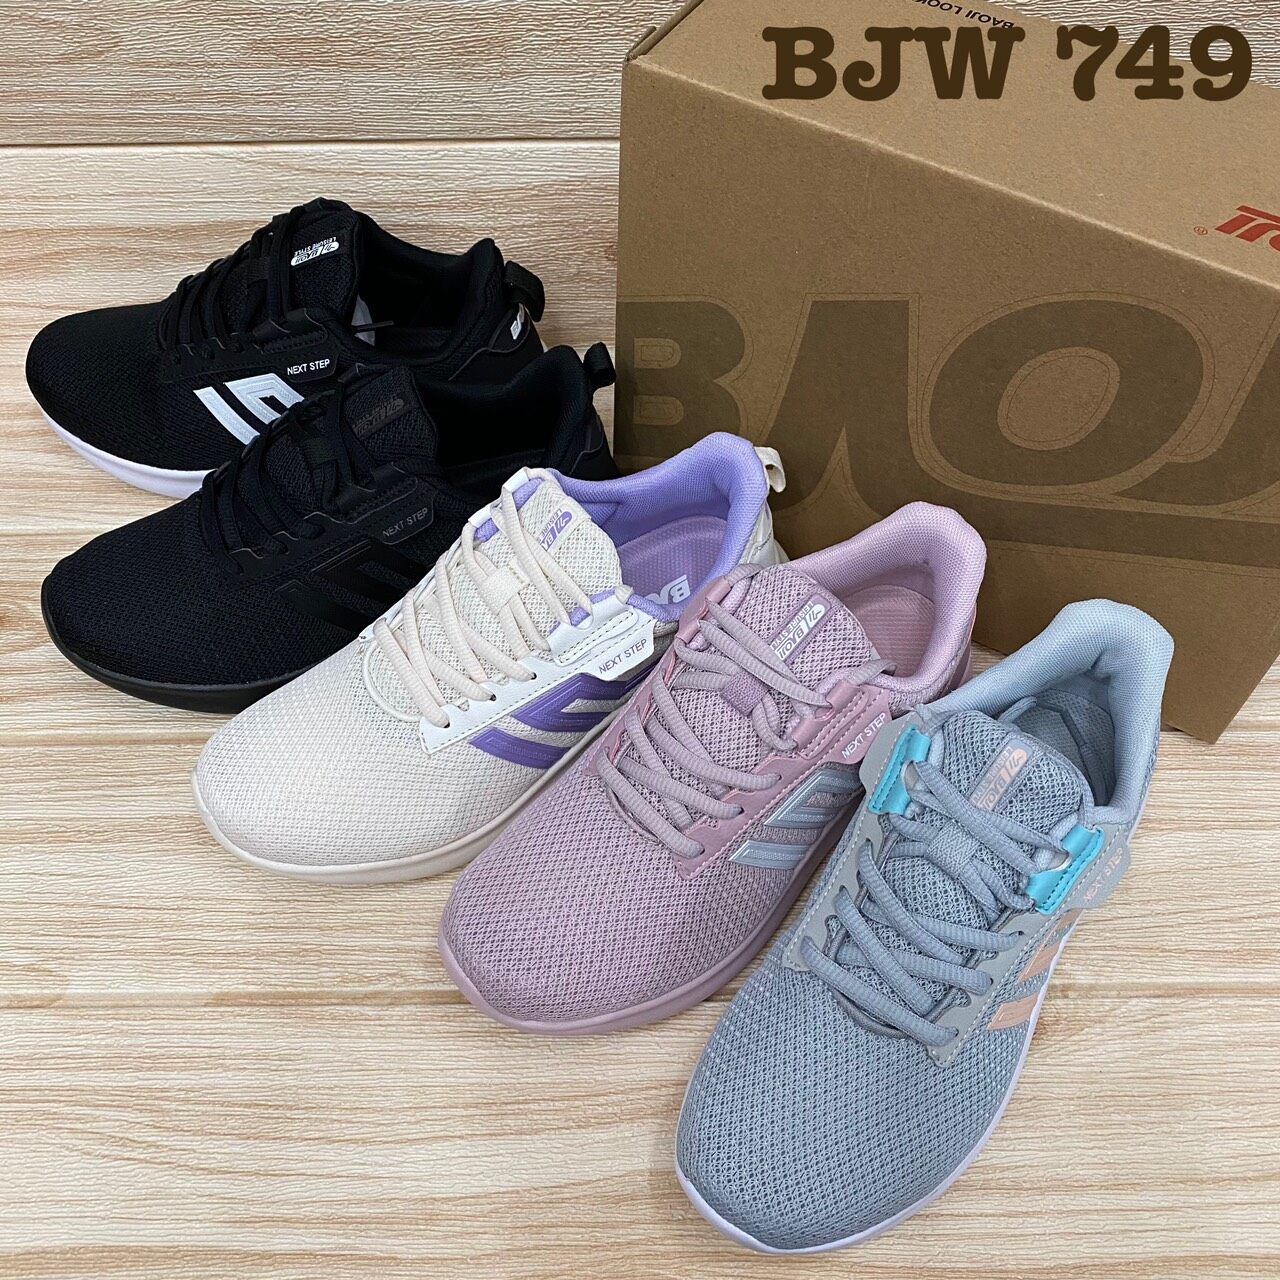 Baoji BJW 749 รองเท้าสนิกเกอร์ (37-41) สีดำ/ดำขาว/ครีม/เทา/ม่วง